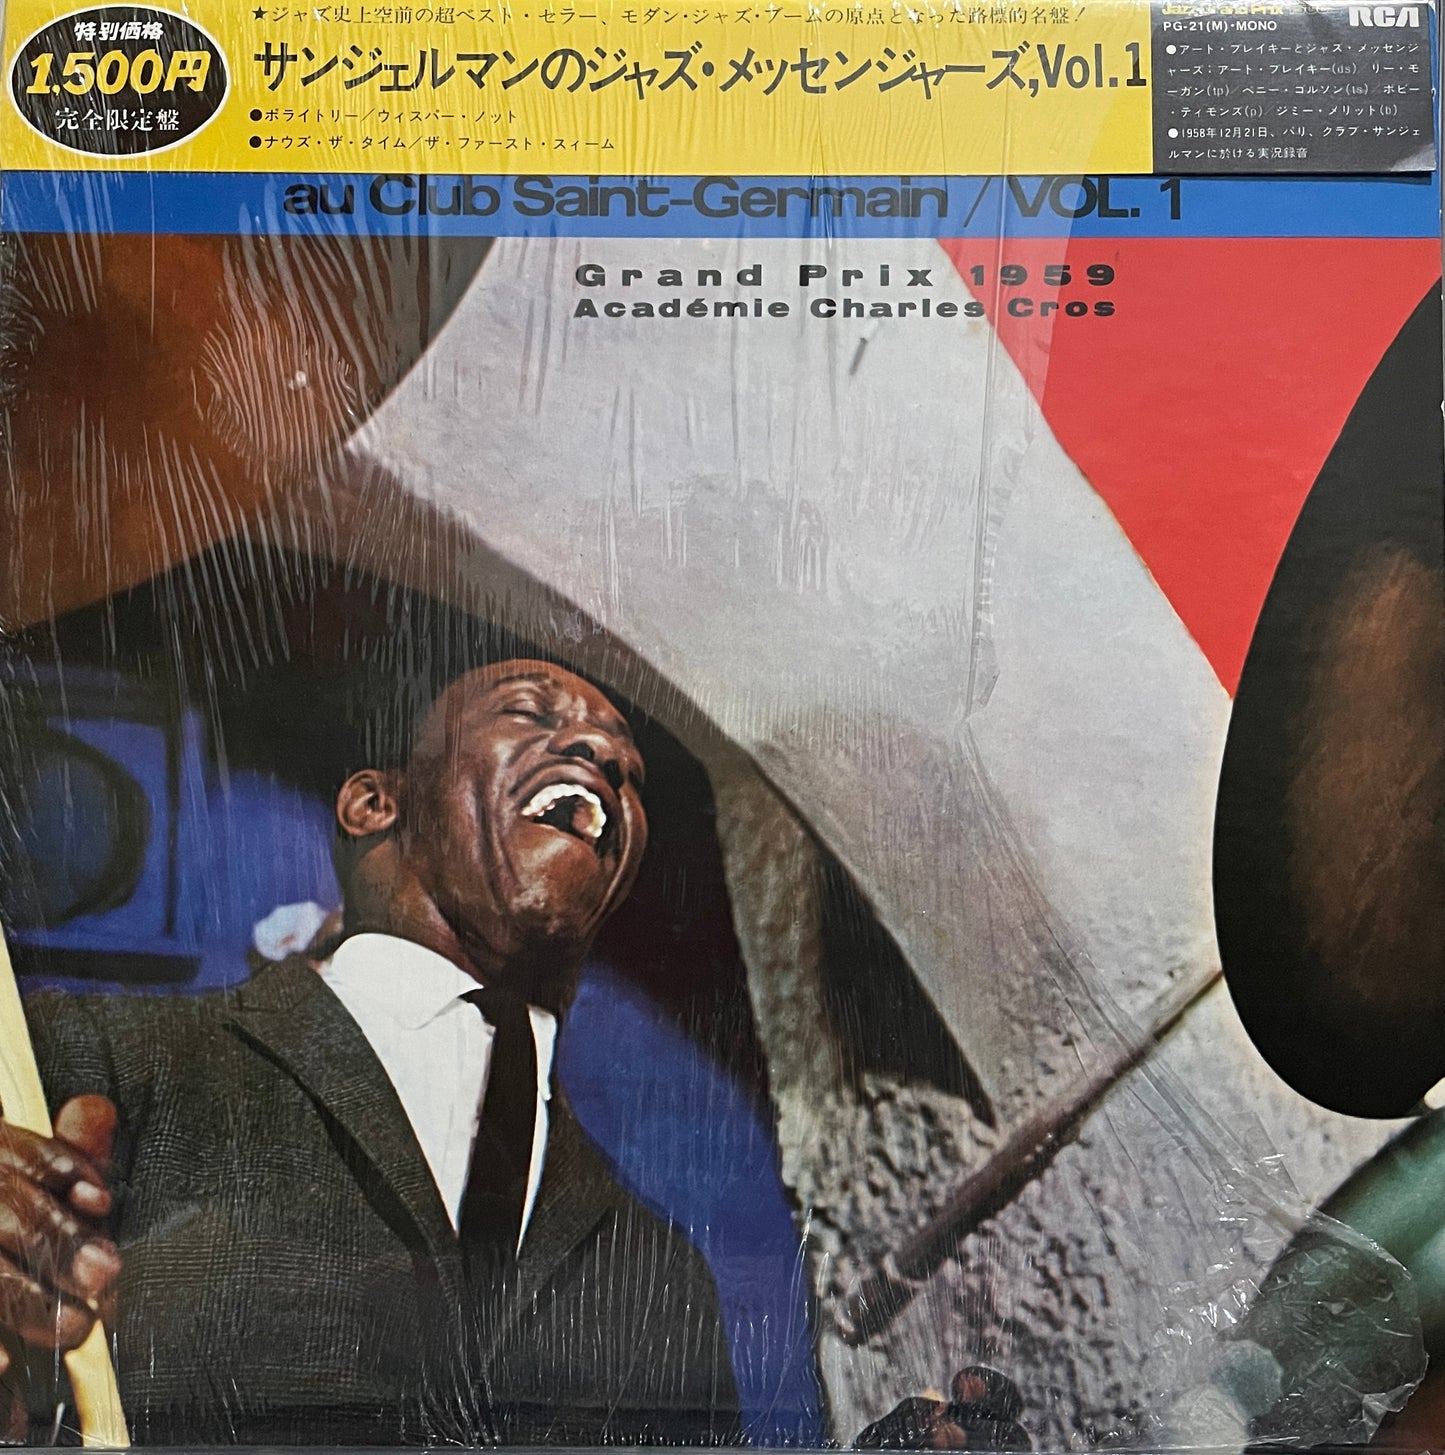 Art Blakey Et Les Jazz-Messengers "Au Club St. Germain Vol. 1" (1976)